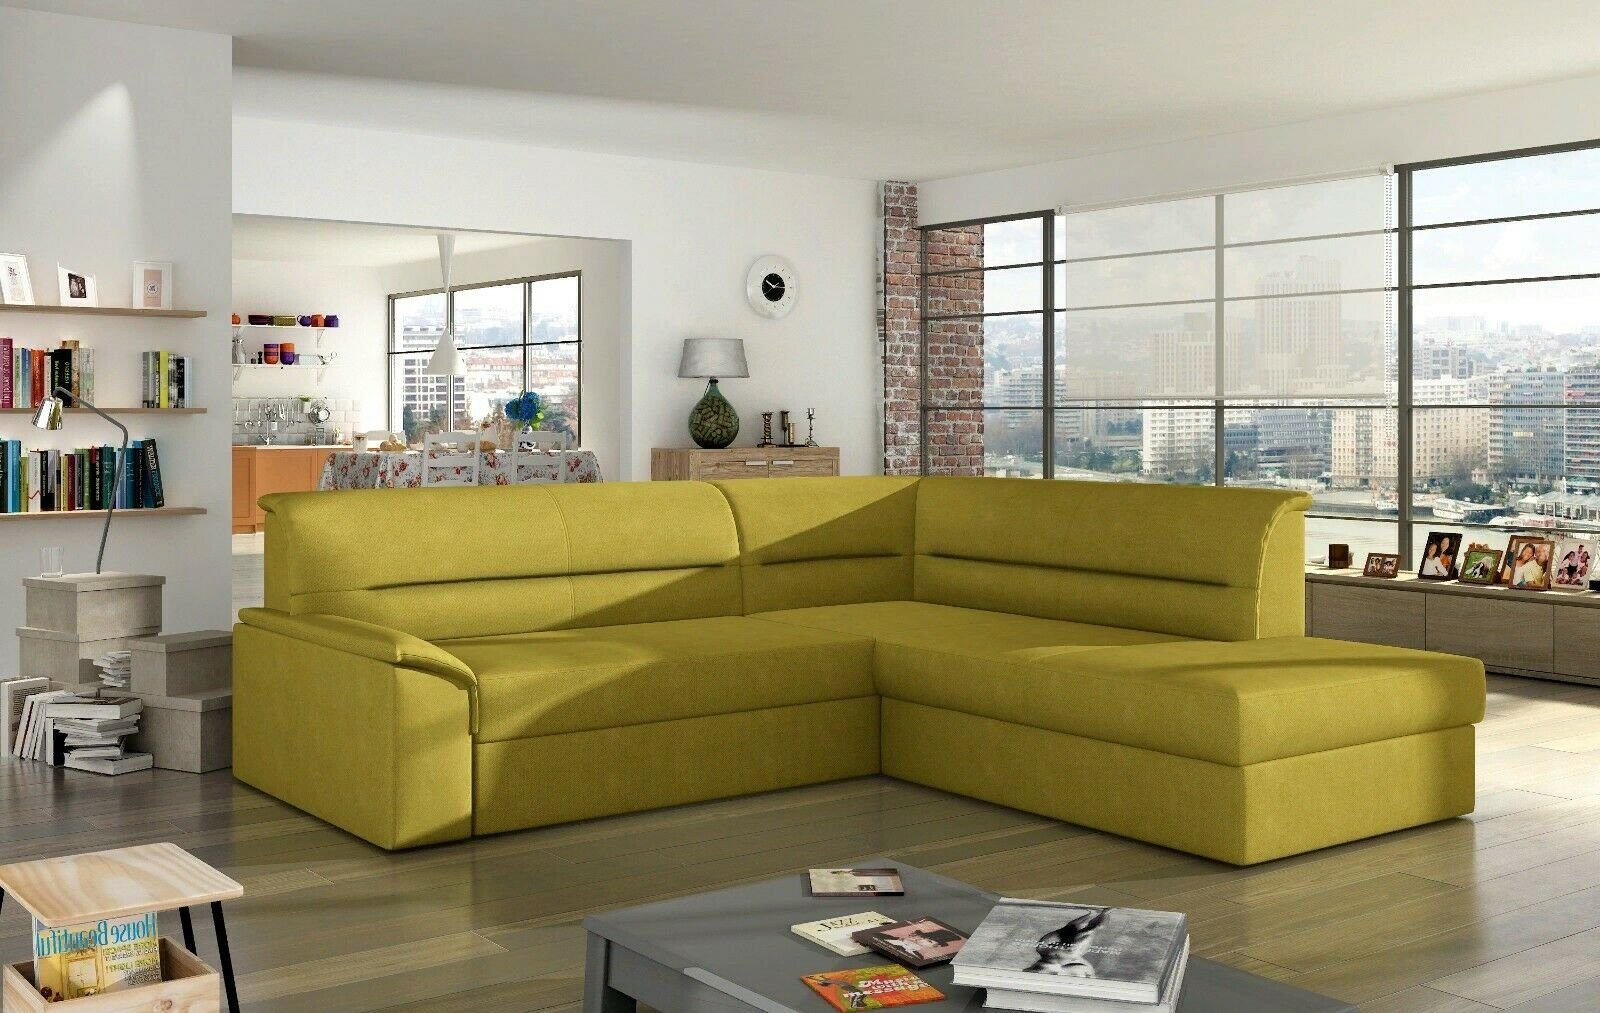 JVmoebel Ecksofa Schlafsofa Bettfunktion Couch Polster Design Bettfunktion Textil, Ecksofa Gelb Mit Sofa